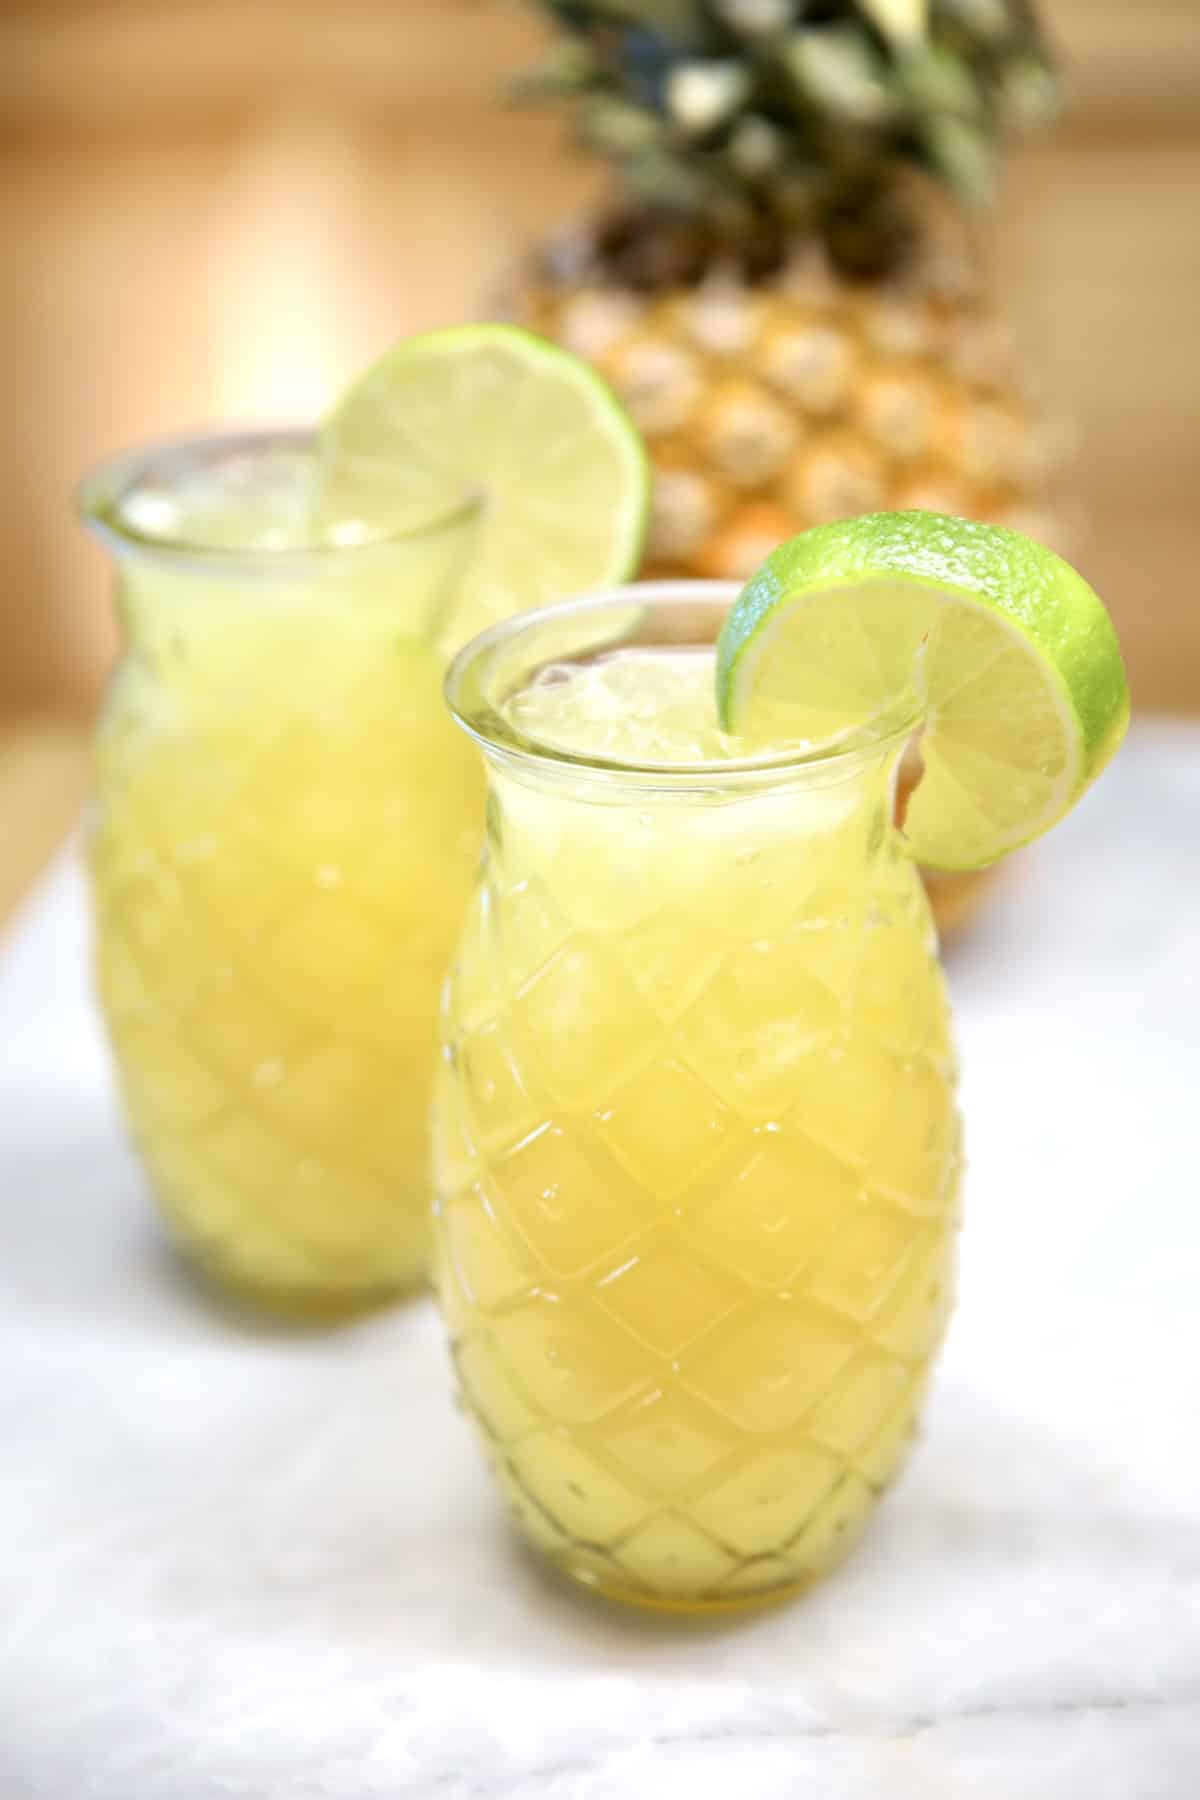 Pineapple Margaritas in tiki glasses.